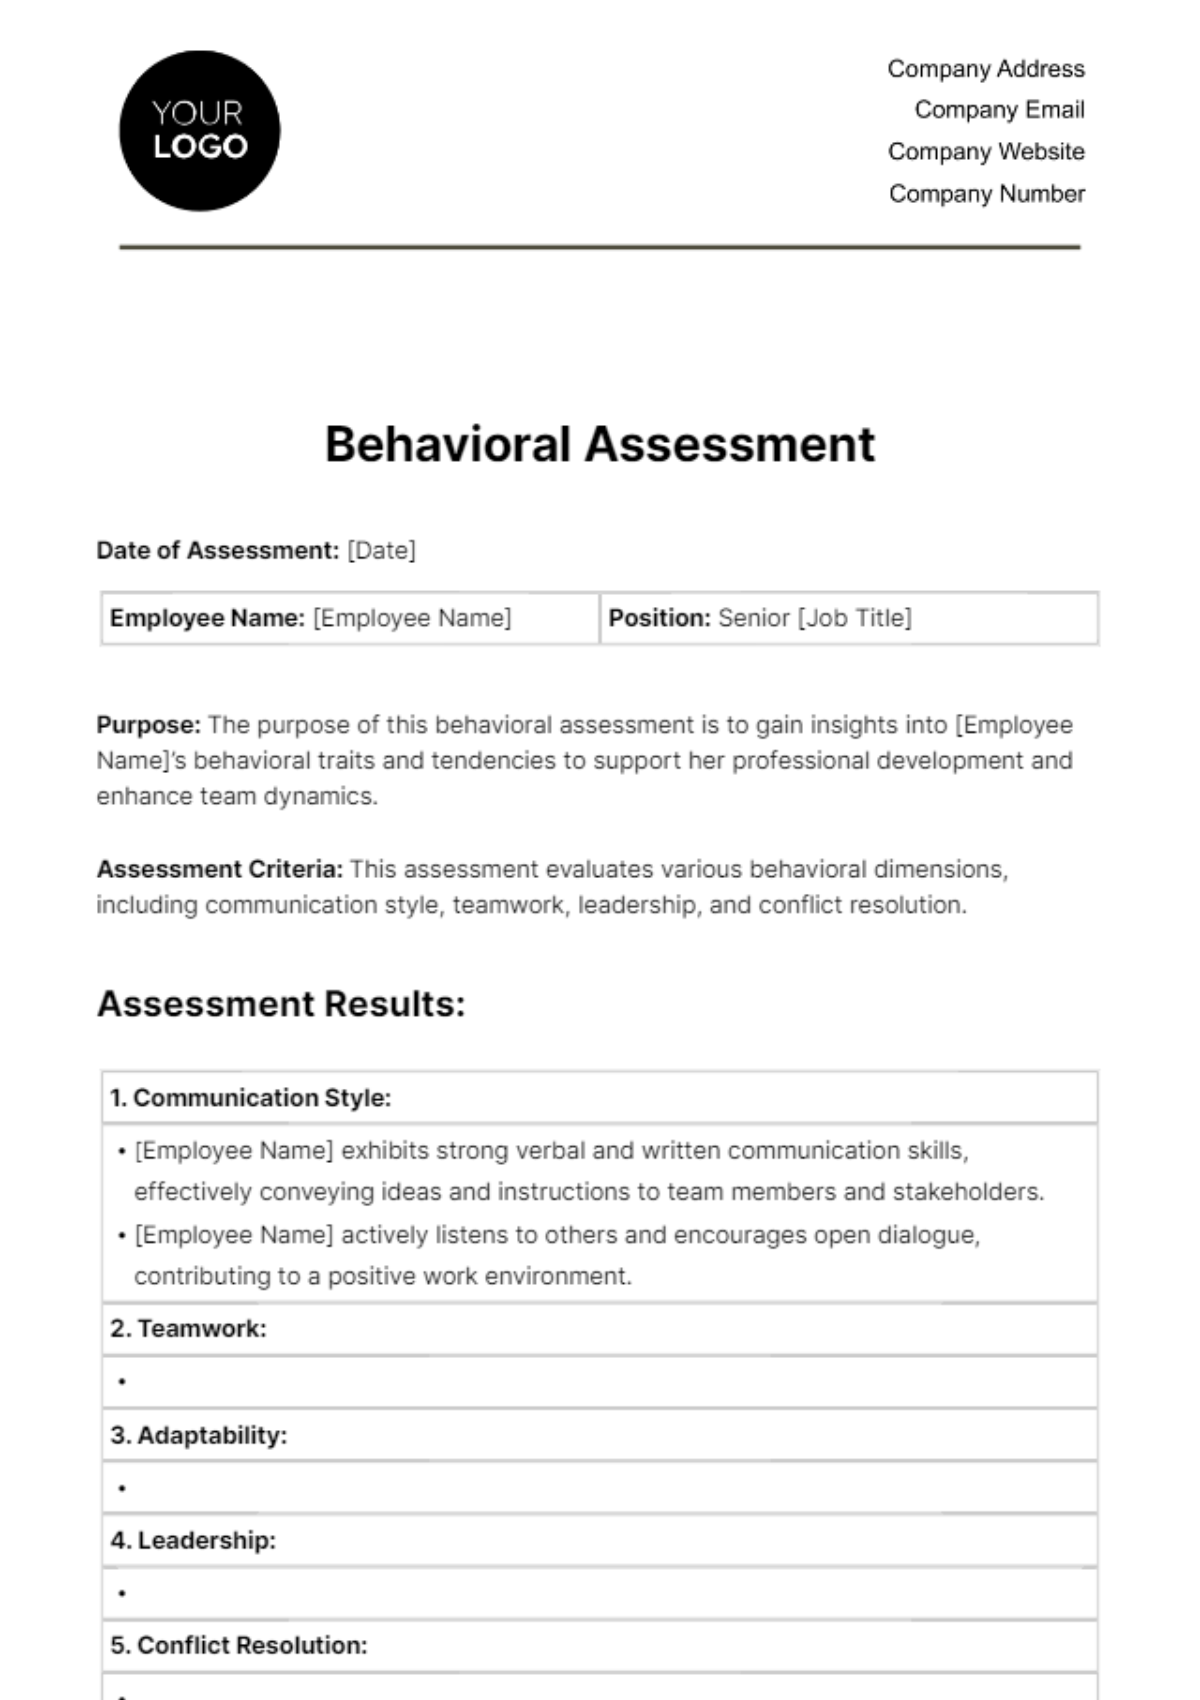 Behavioral Assessment HR Template